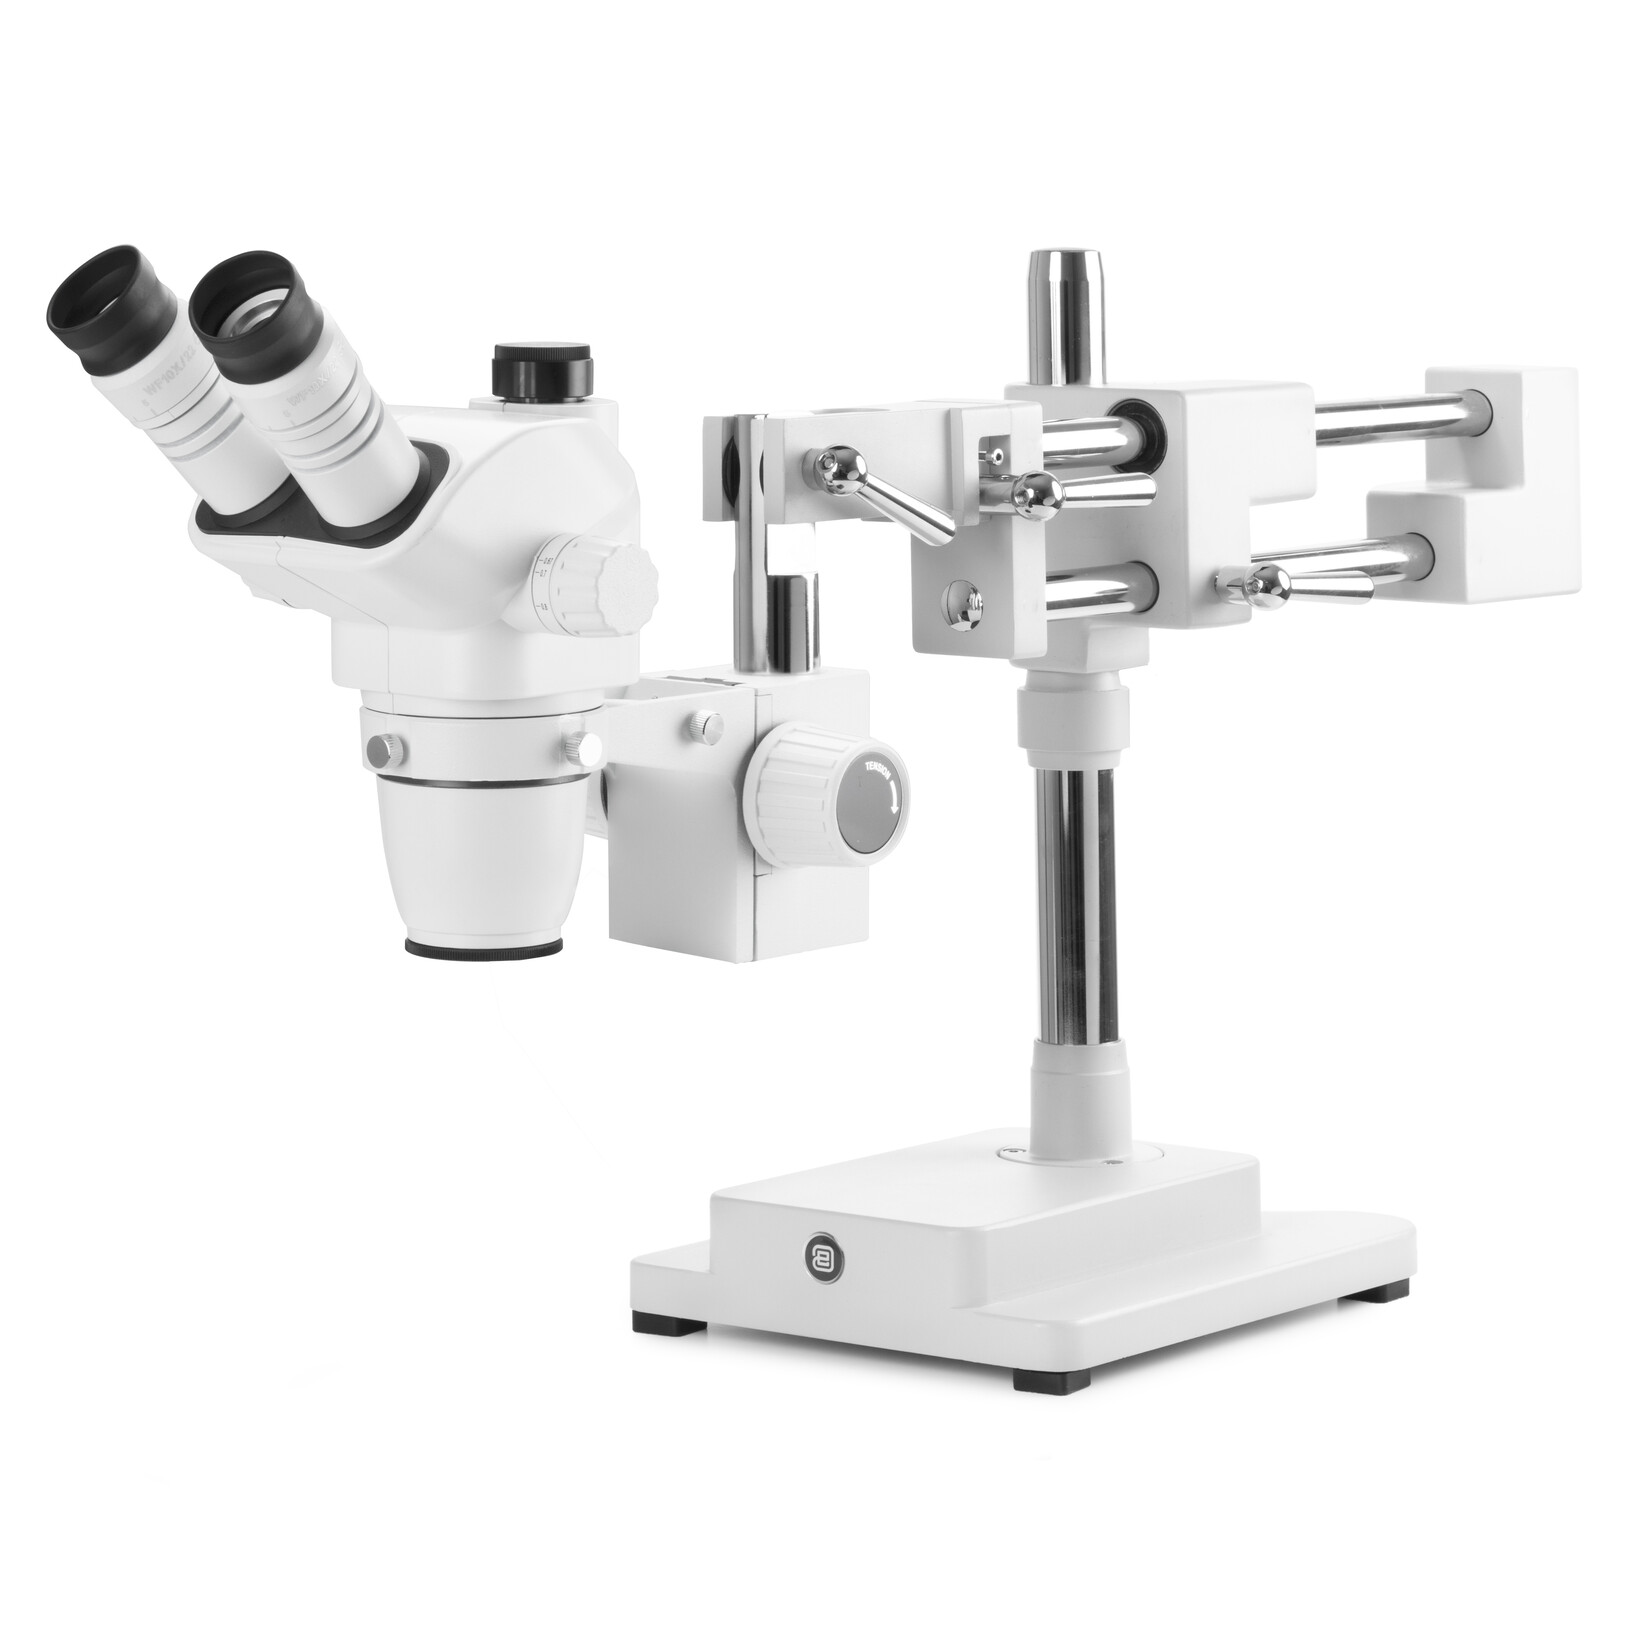 Trinocular stereo zoom microscope NexiusZoom EVO-DFS, 0.65x to 5.5x zoom objective, magnification from 6.5x to 55x